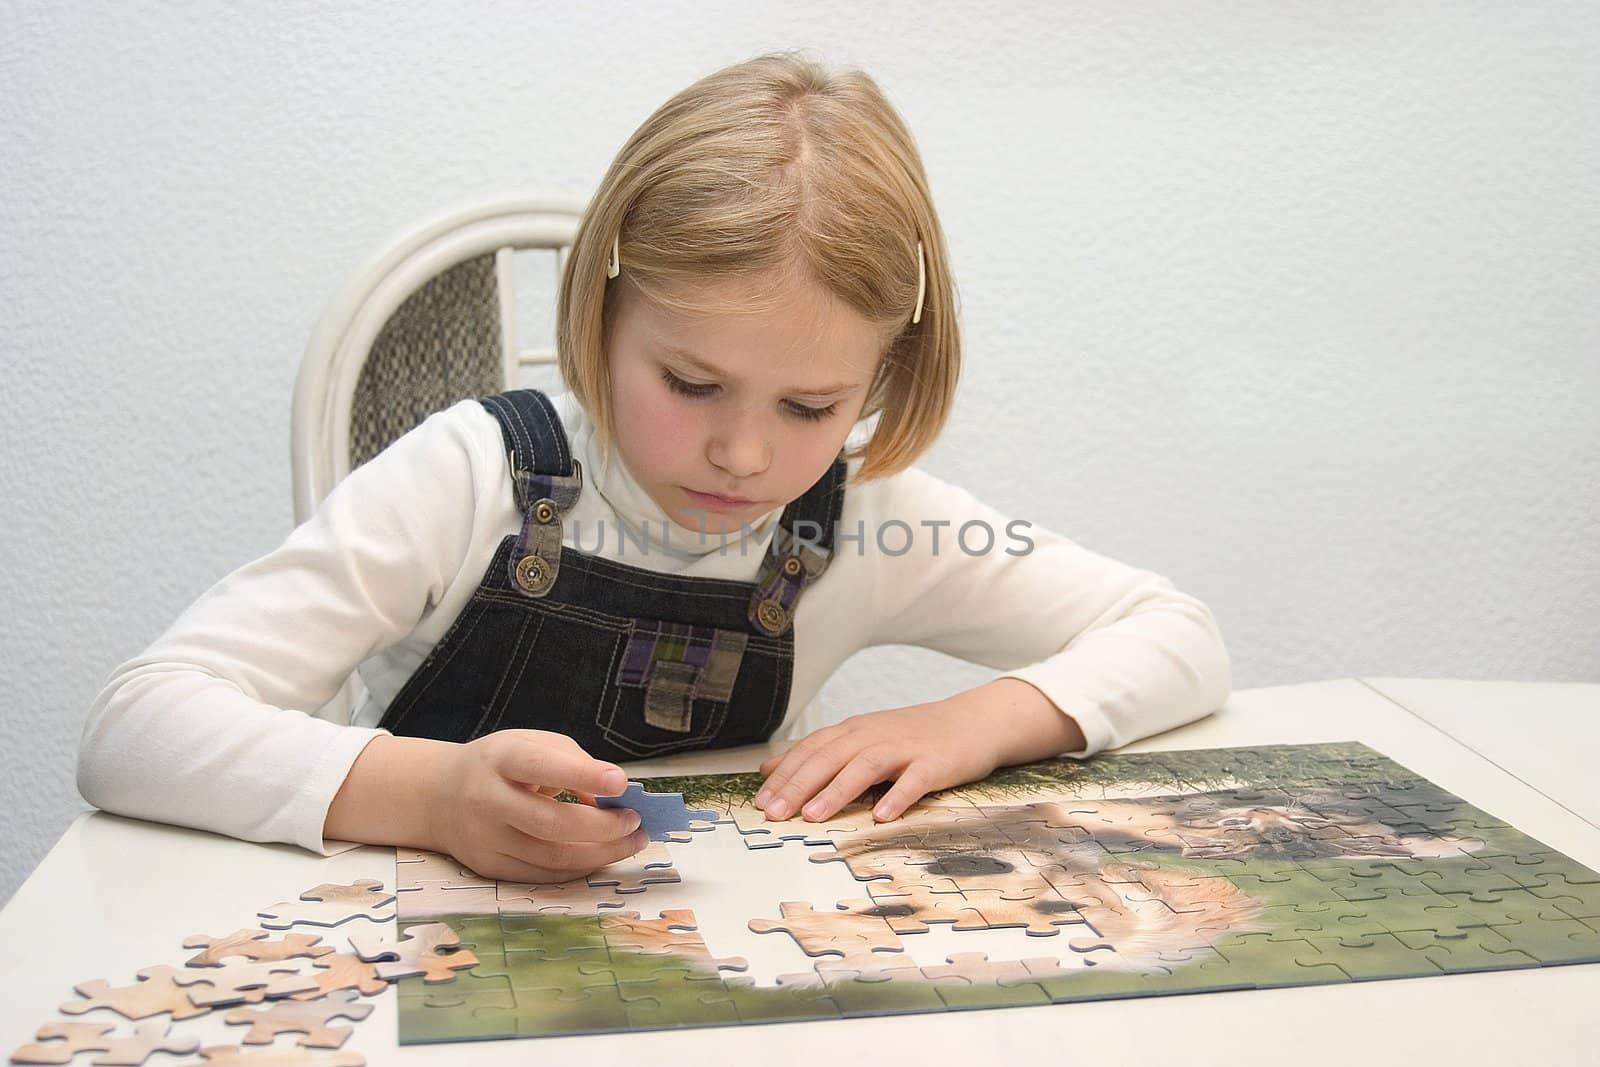 Child composes Jigsaws by miradrozdowski